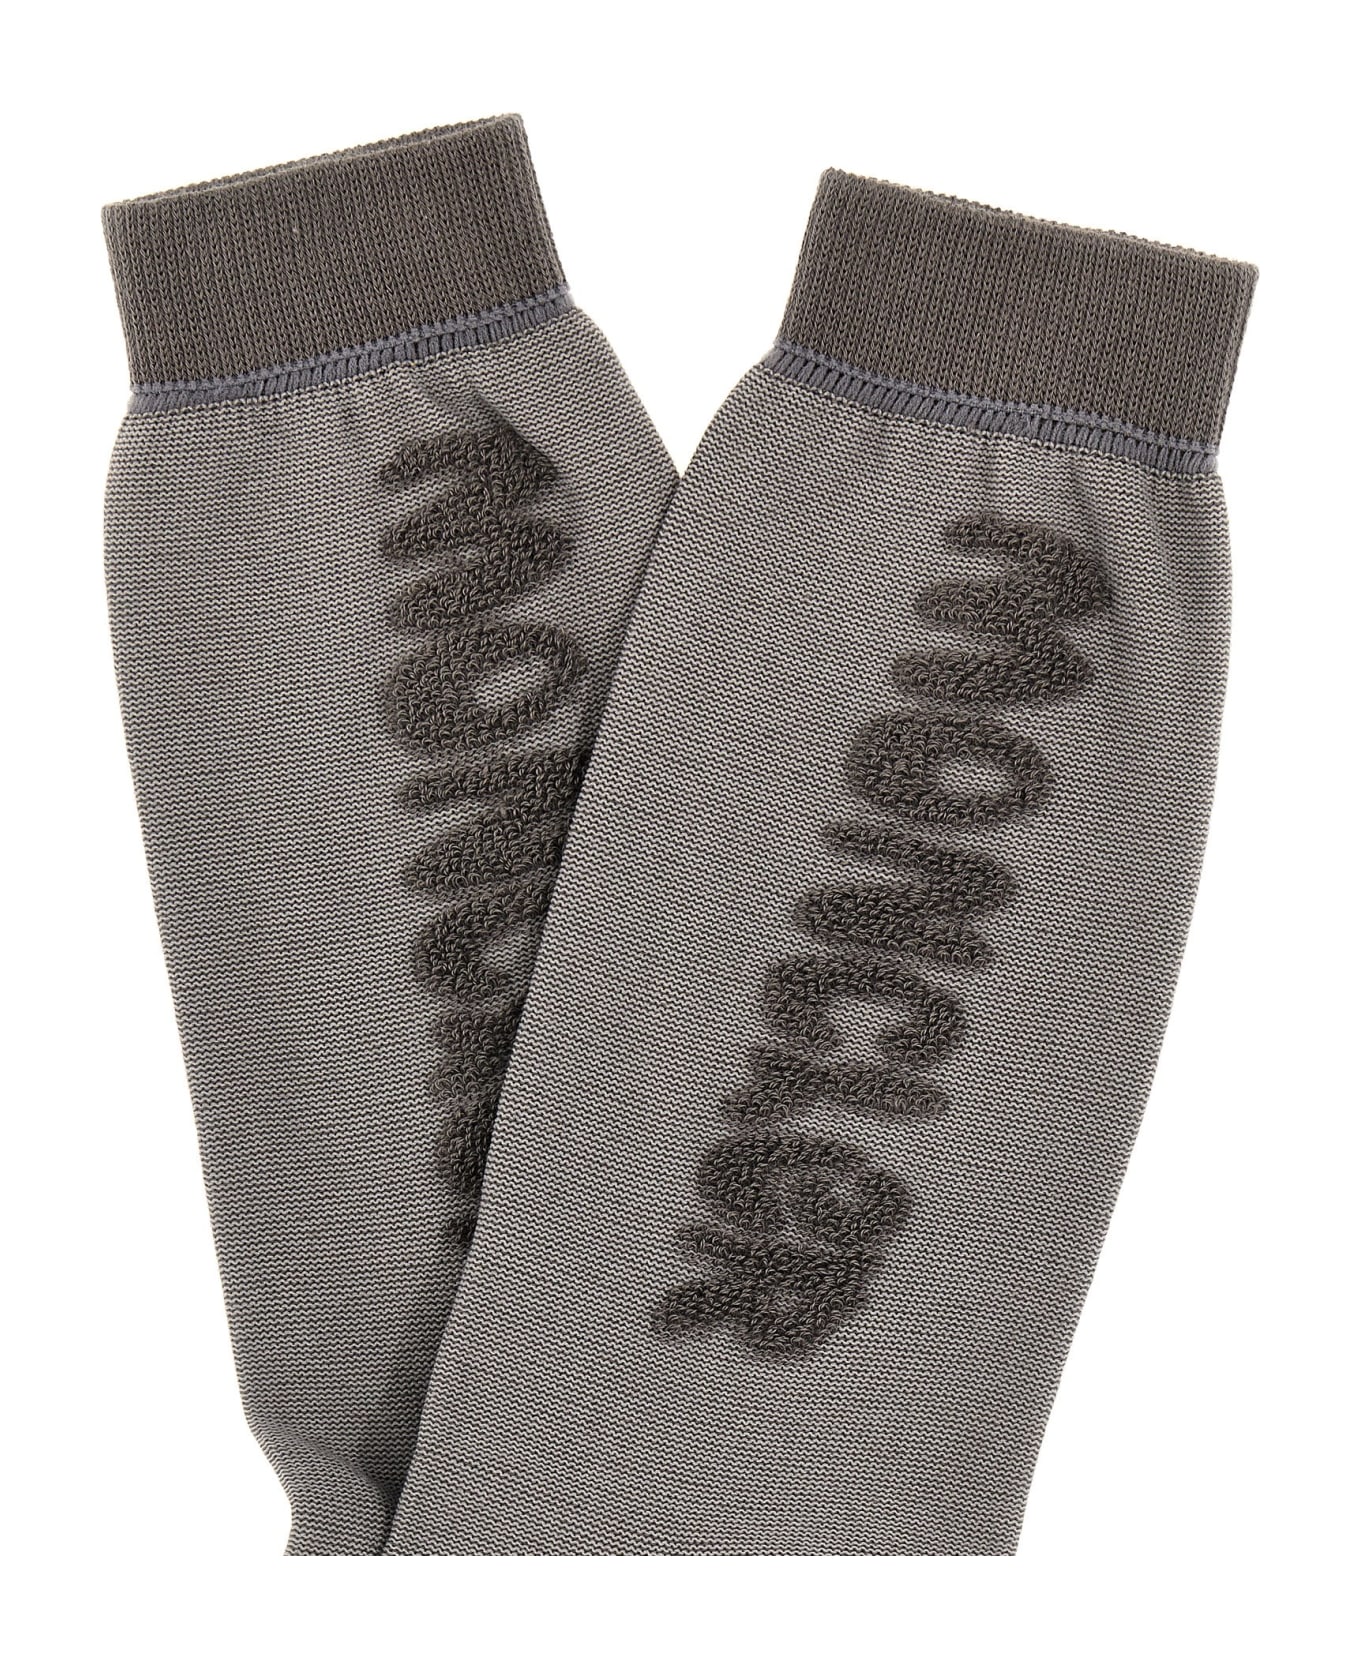 Moncler Genius X Salehe Bembury Socks - Gray